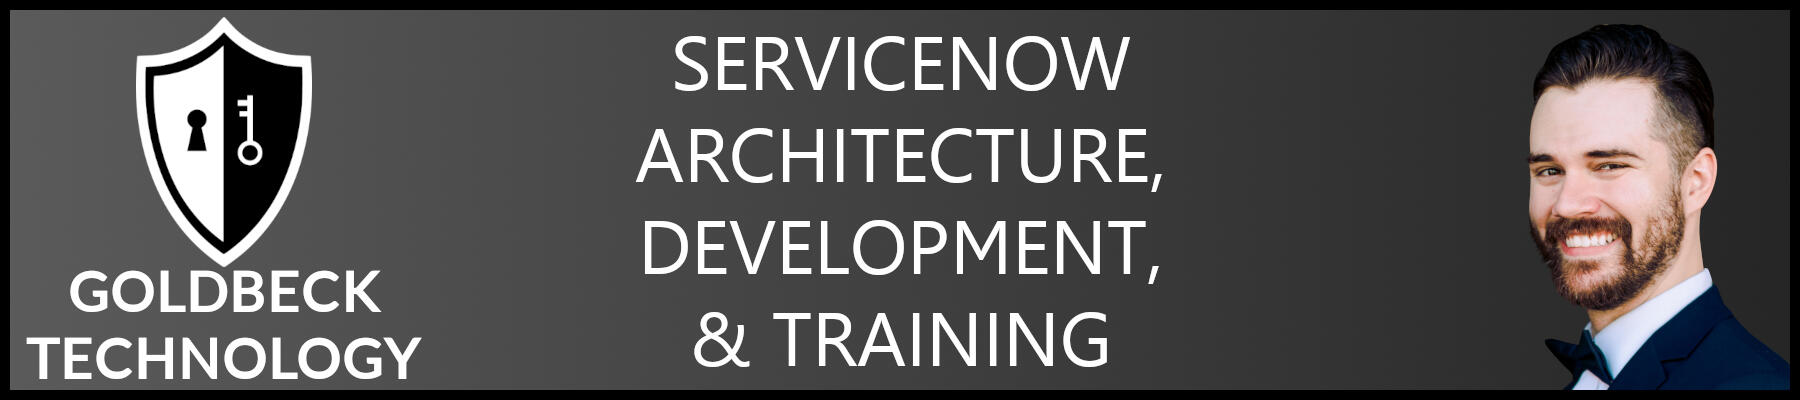 Goldbeck Technology | ServiceNow Architecture, Development And Training